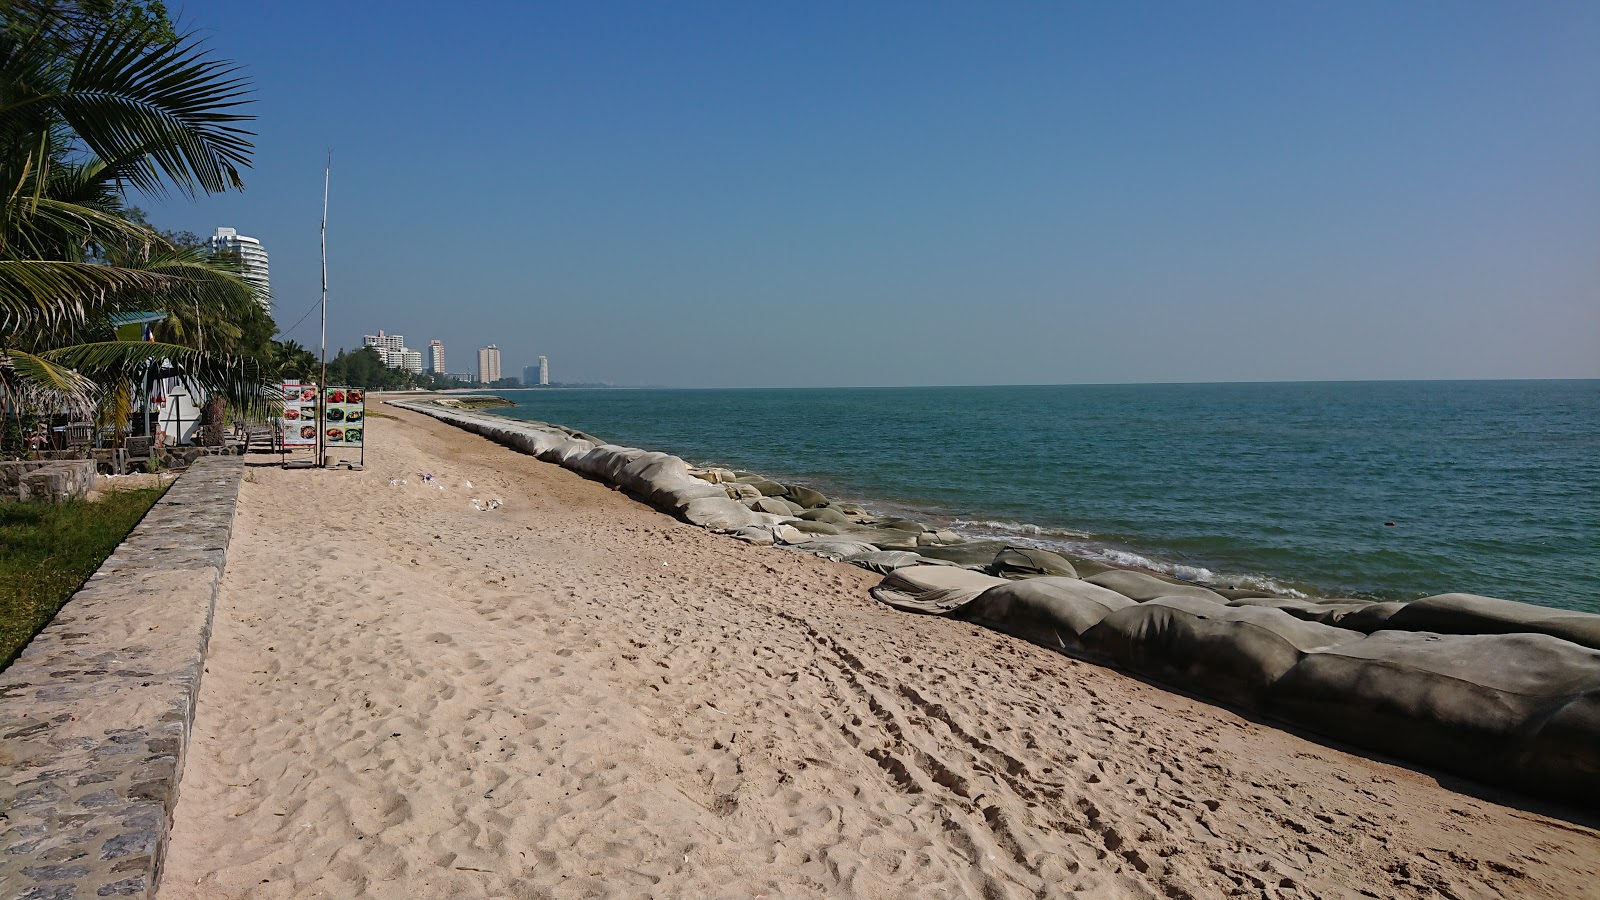 Foto de Regent Cha-Am Beach - lugar popular entre los conocedores del relax